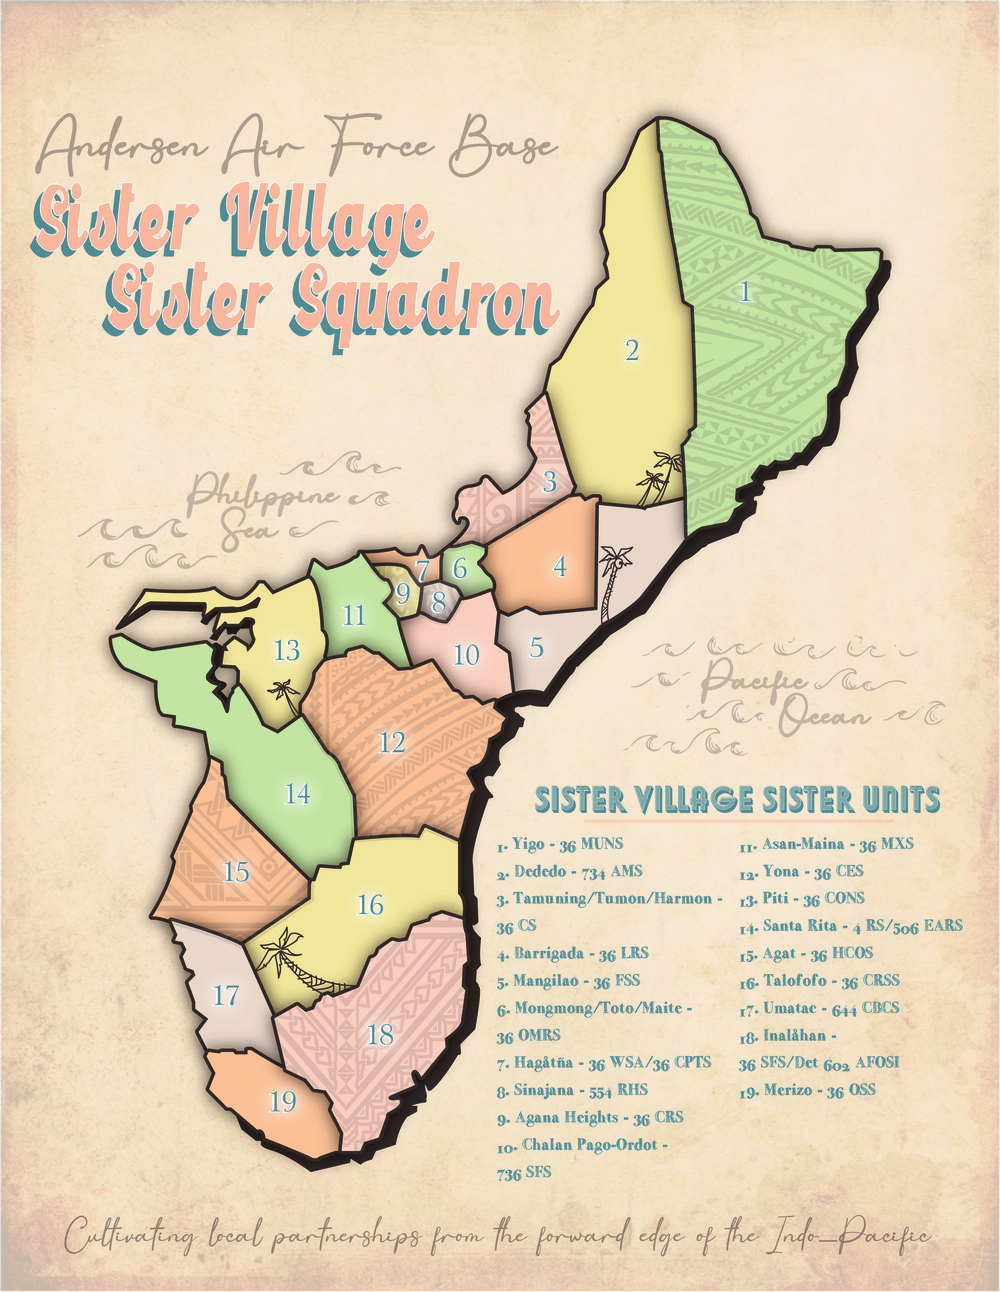 Sister Village Sister Squadron map